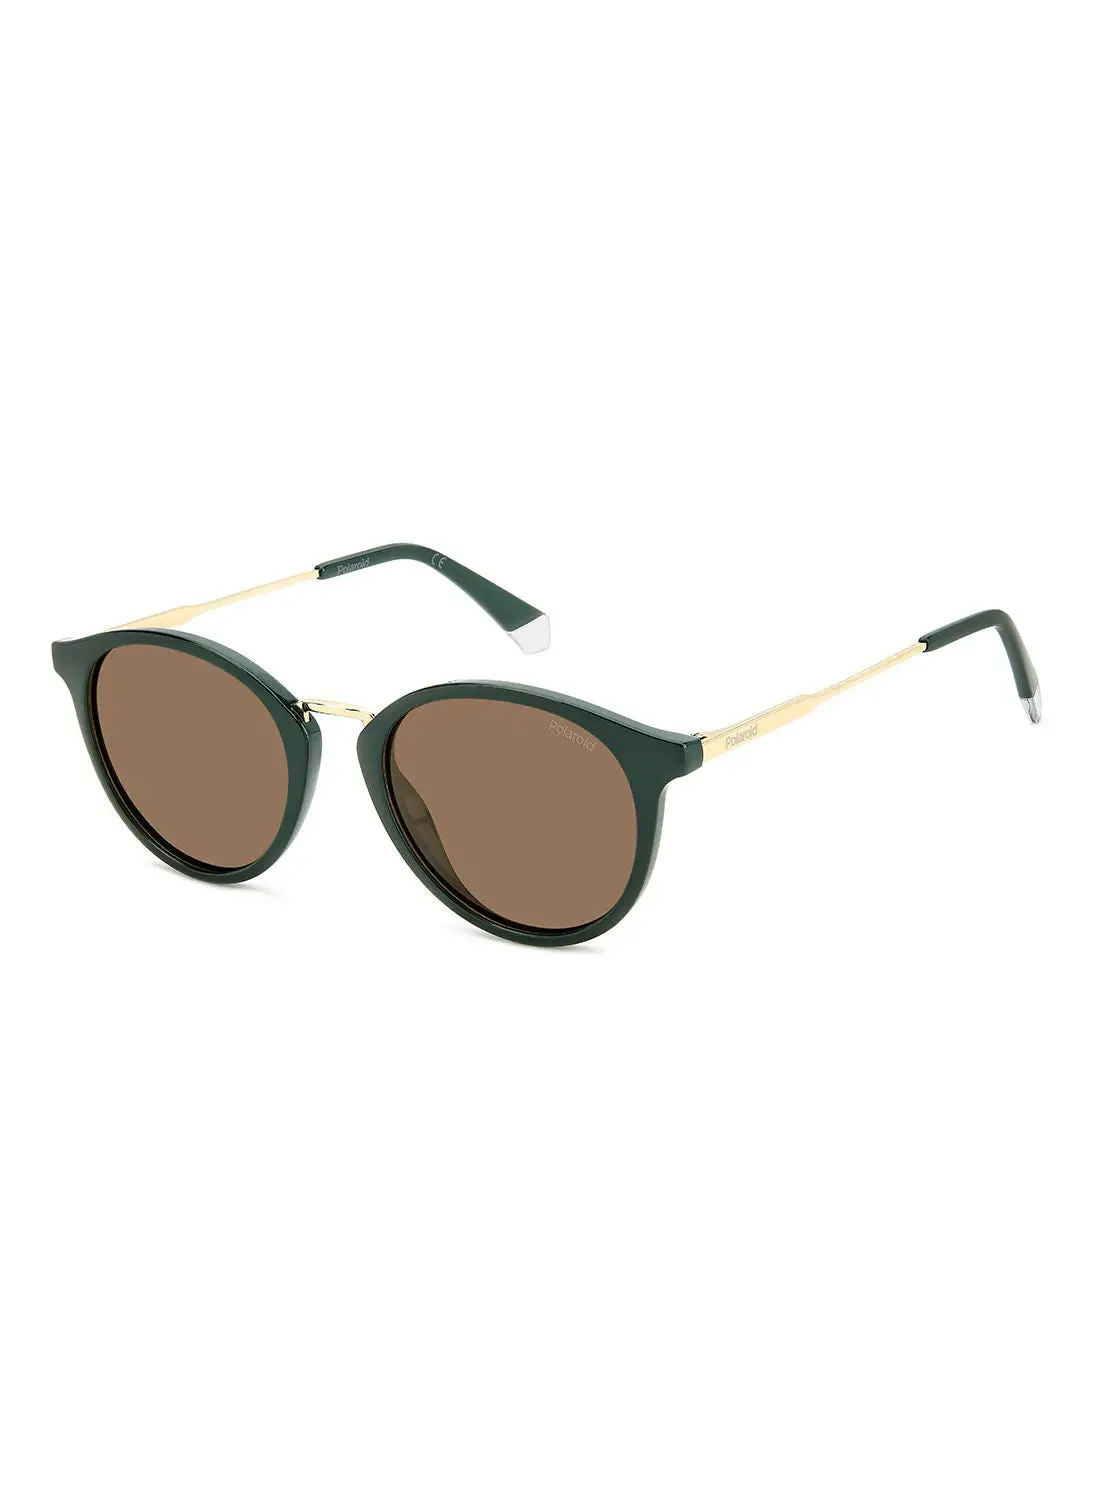 Polaroid Unisex UV Protection Round Sunglasses - Pld 4147/S/X Green 51 - Lens Size: 51 Mm